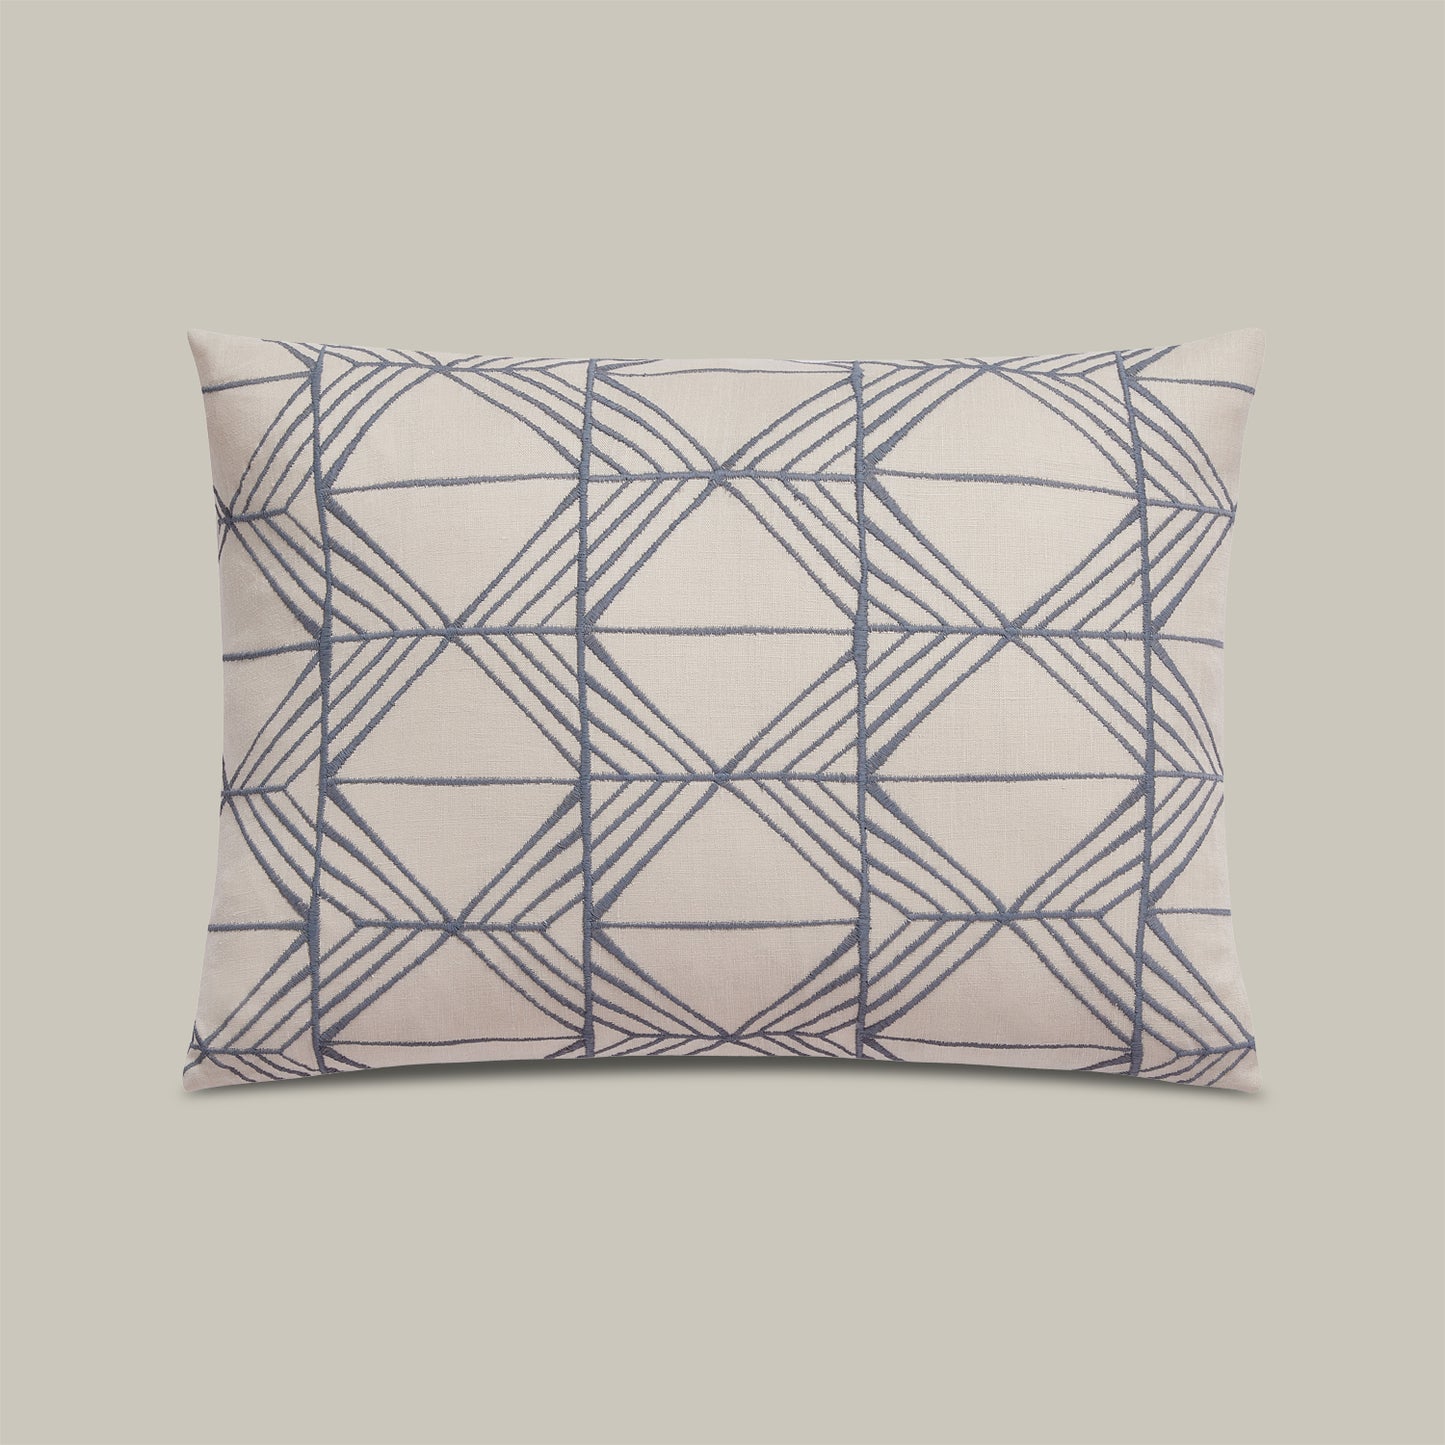 Embroidered Lattice Pillow